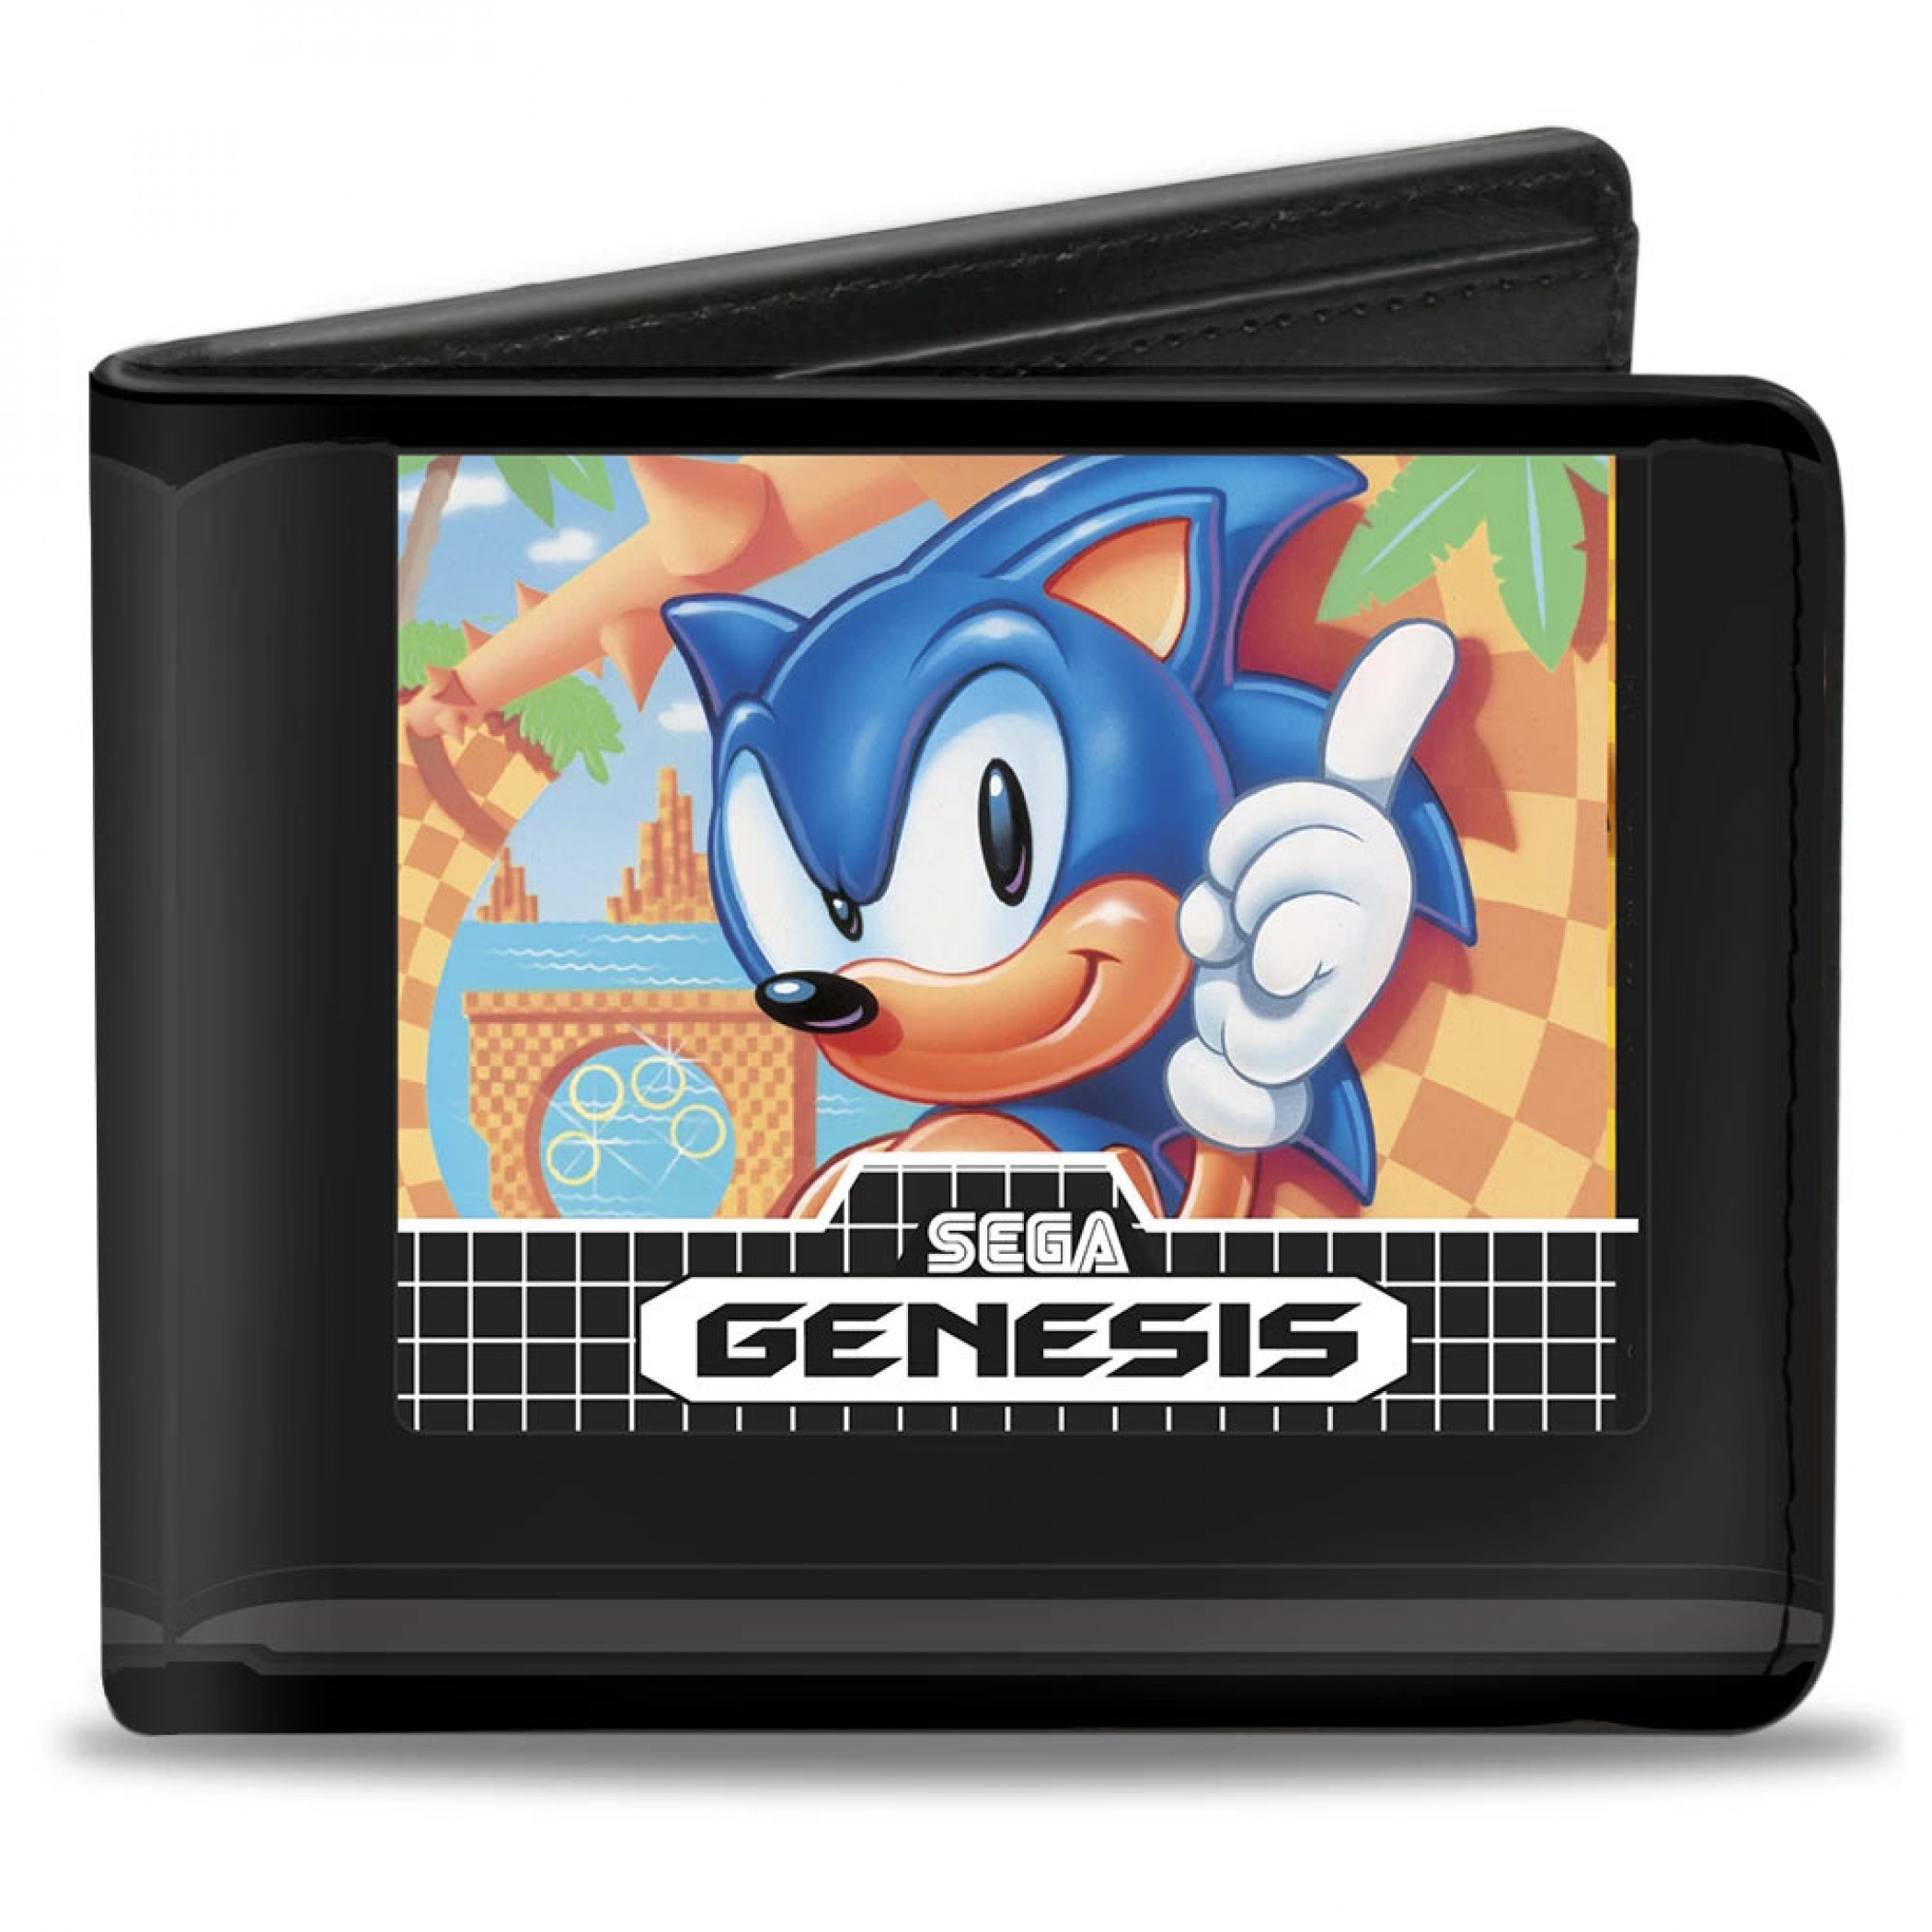 Sonic tab. Cartridge Sega Genesis. Sonic 1 Cartridge. Sonic 3 картридж Sega Genesis. Sega Genesis Sonic 2 Cartridge.